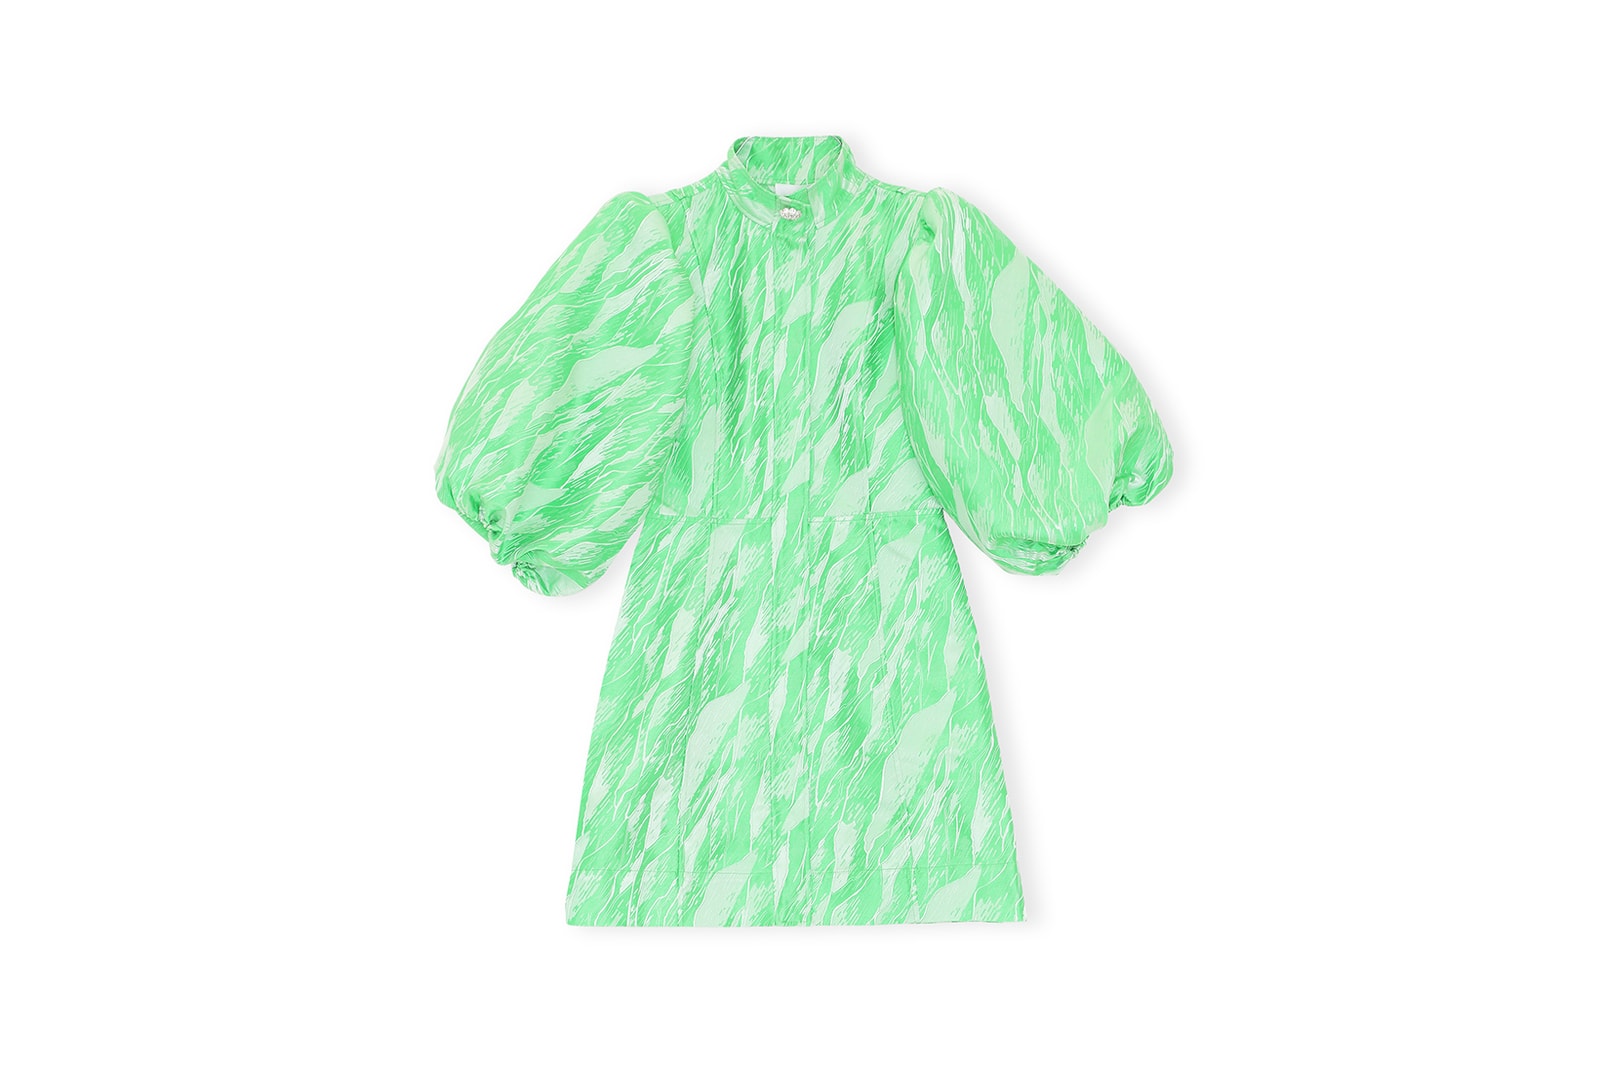 GANNI Spring/Summer 2020 Collection Campaign Tiger Stripe Print Dress